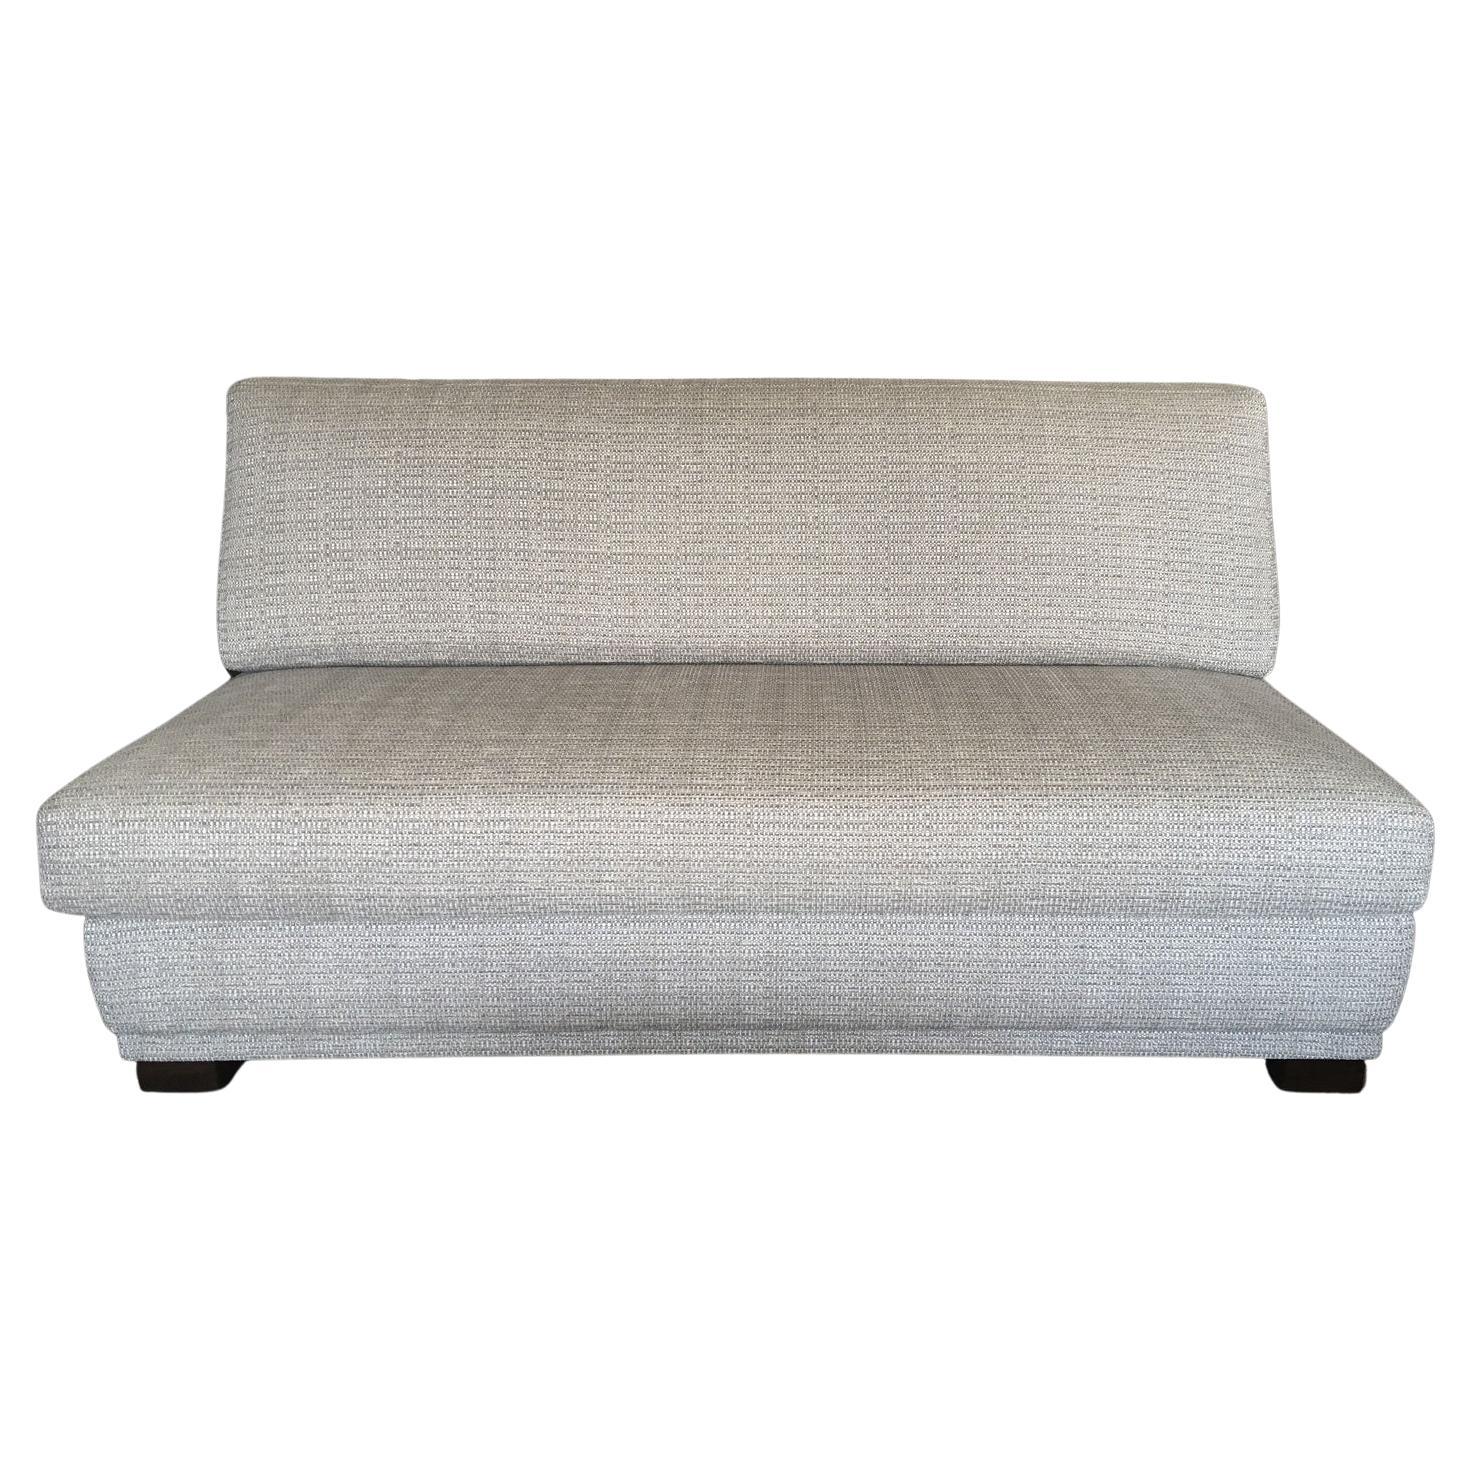 Italy Contemporary Design 2 Seats Sofa Light Grey For Sale